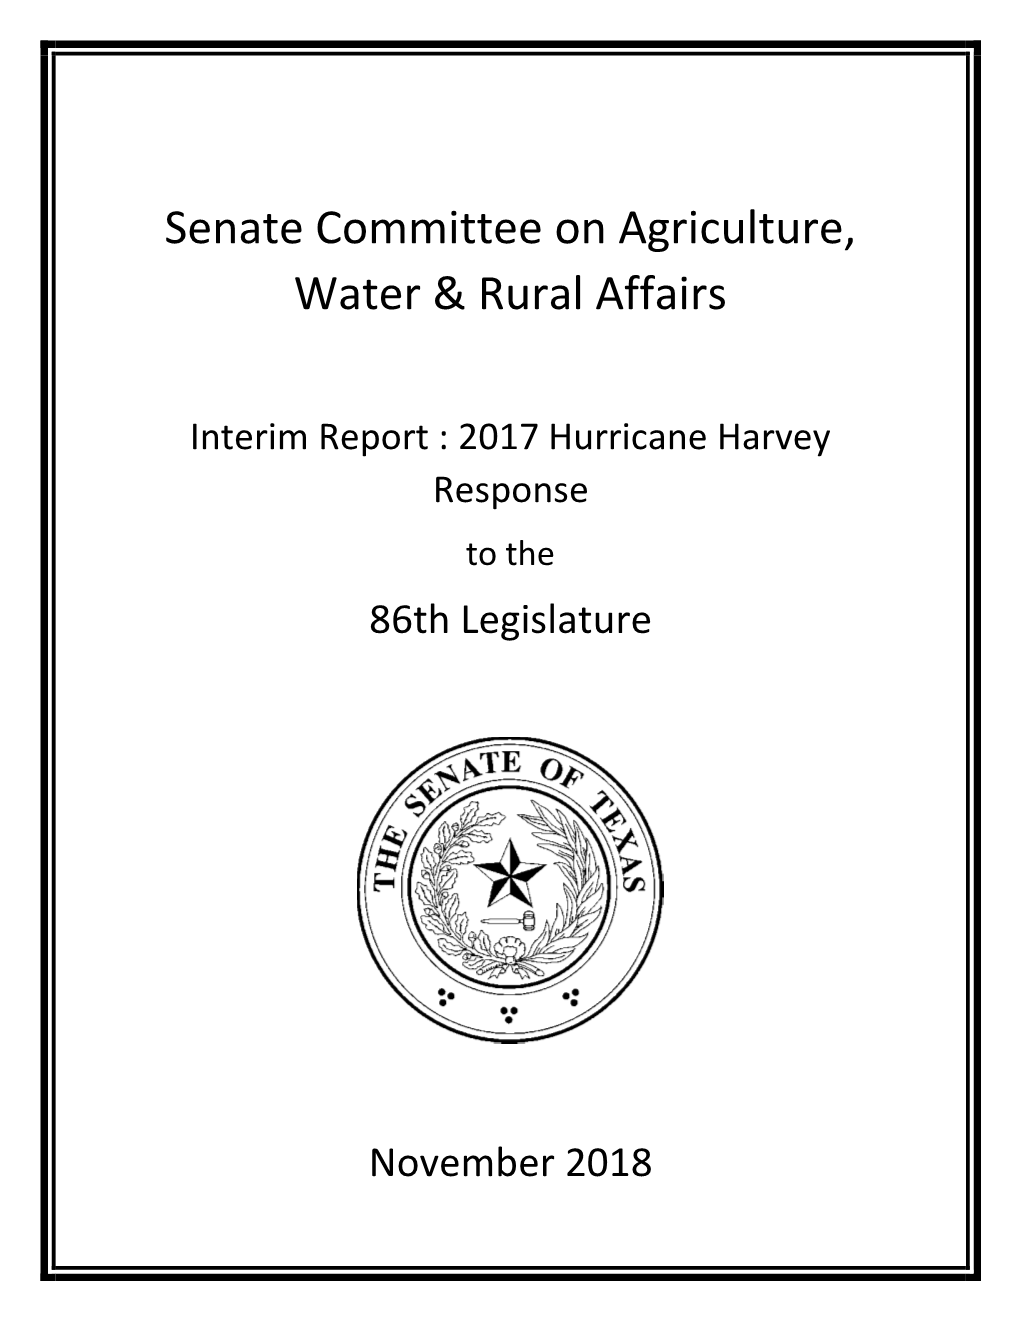 Senate Committee on Agriculture, Water & Rural Affairs Interim Report